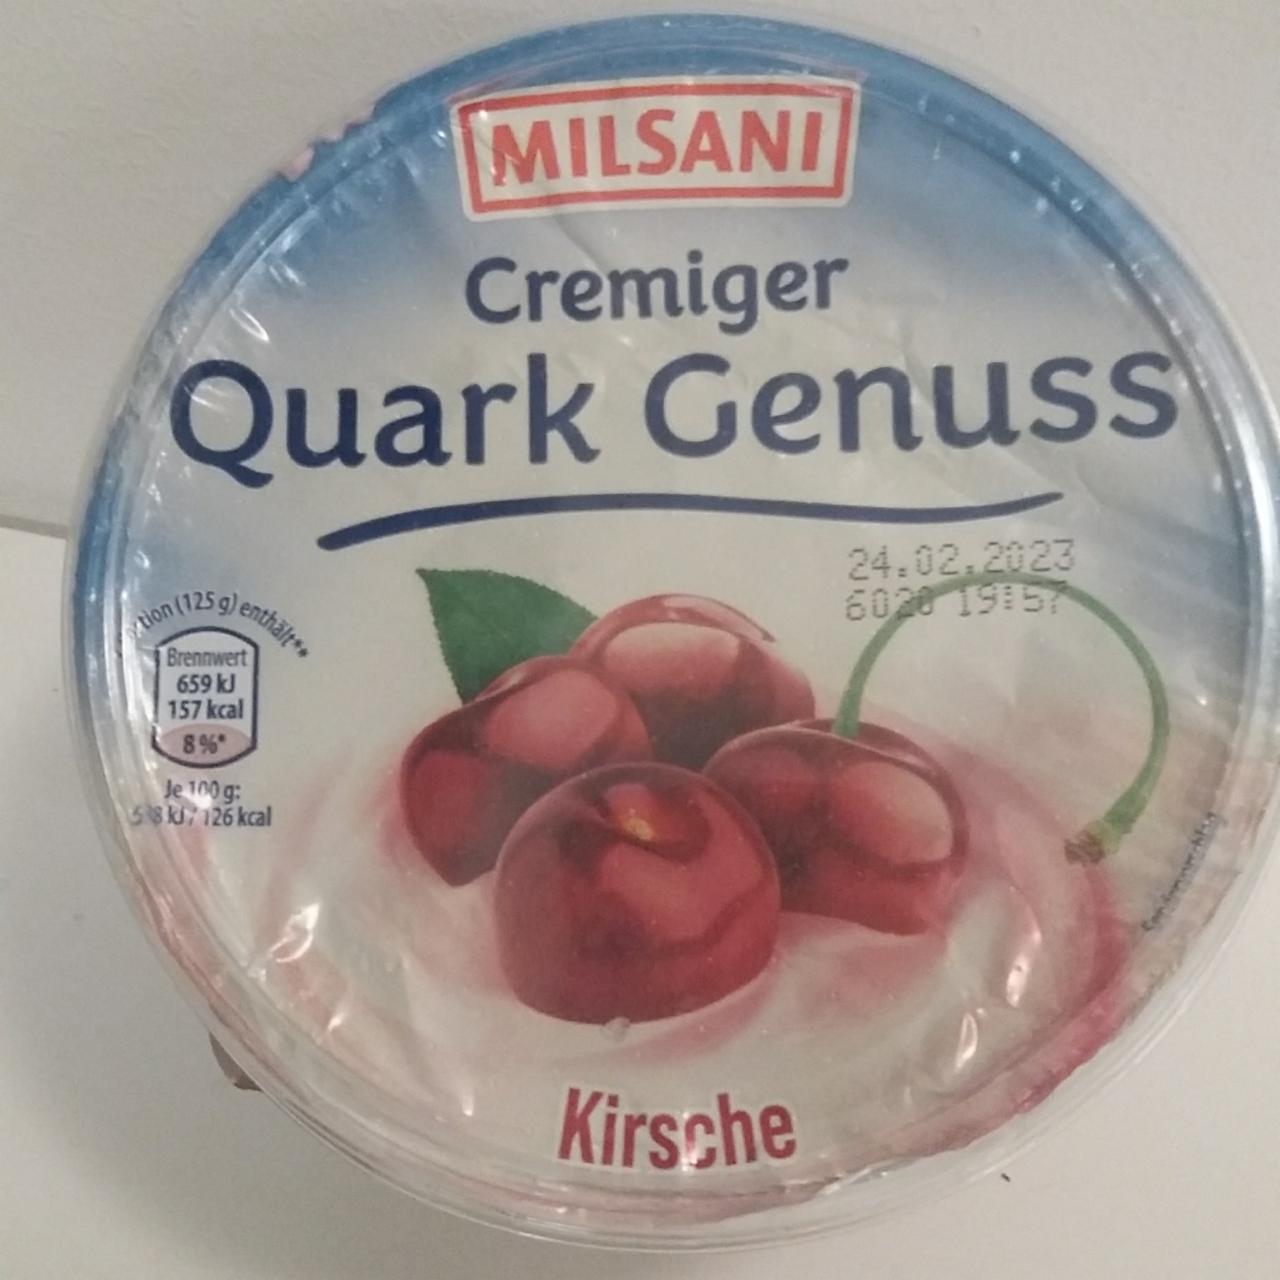 Fotografie - Cremiger Quark Genuss Kirsche Milsani